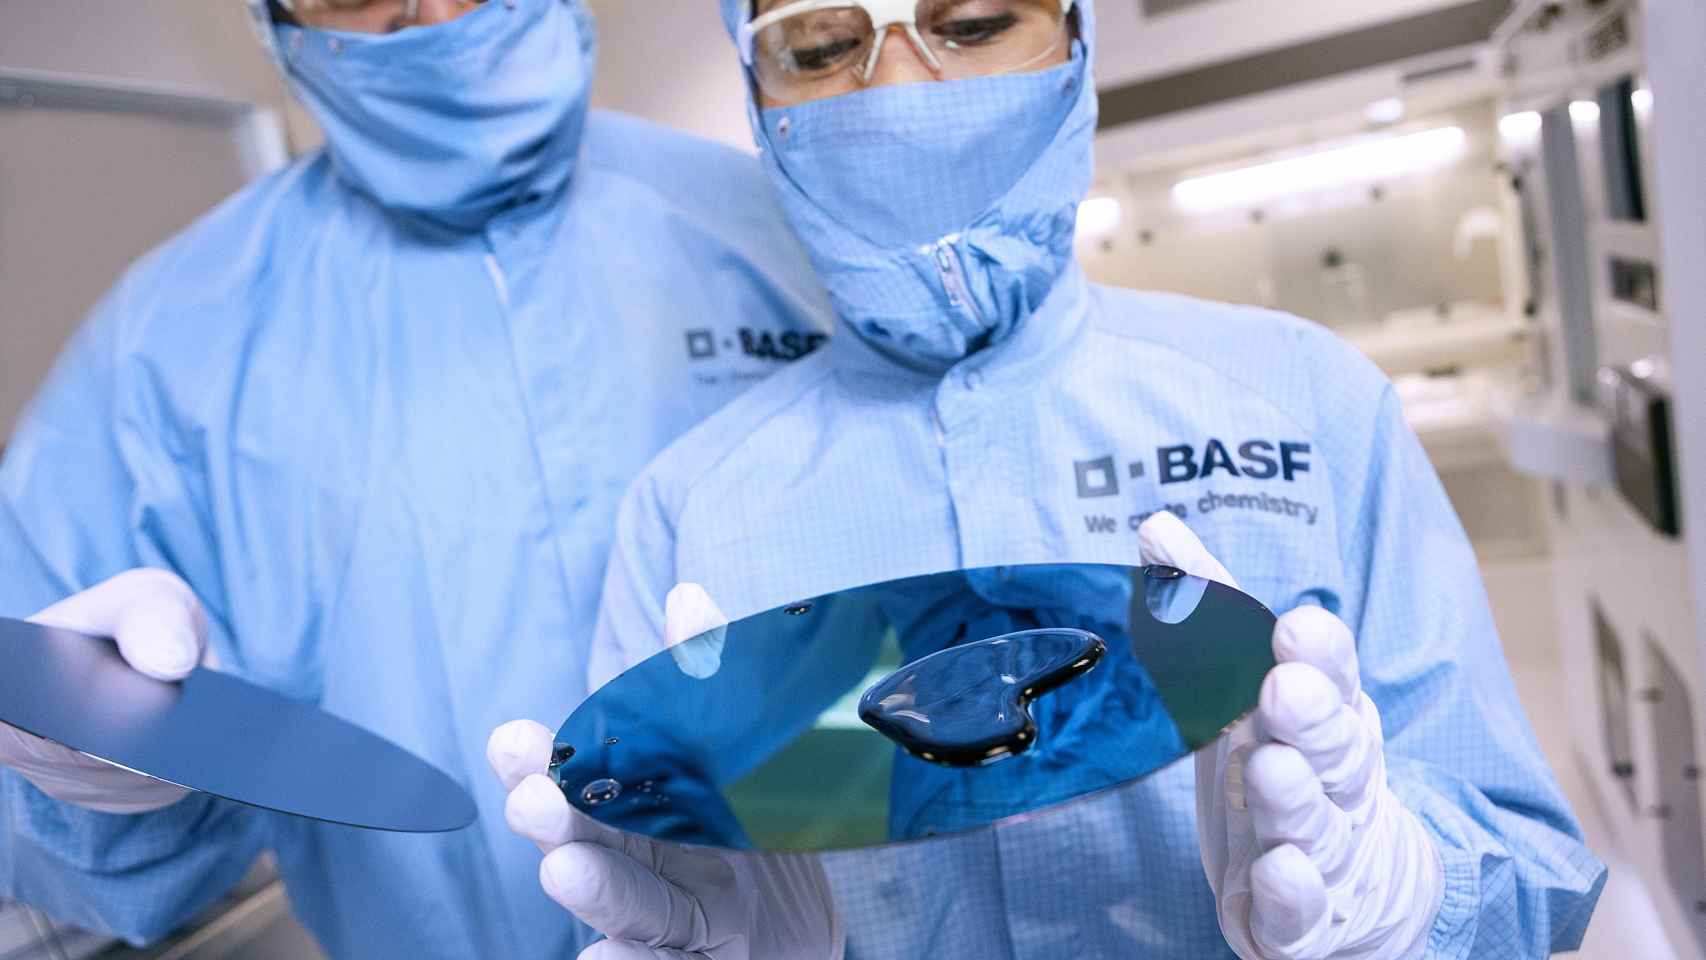 Científicos de Basf en un proyecto de innovación / BASF